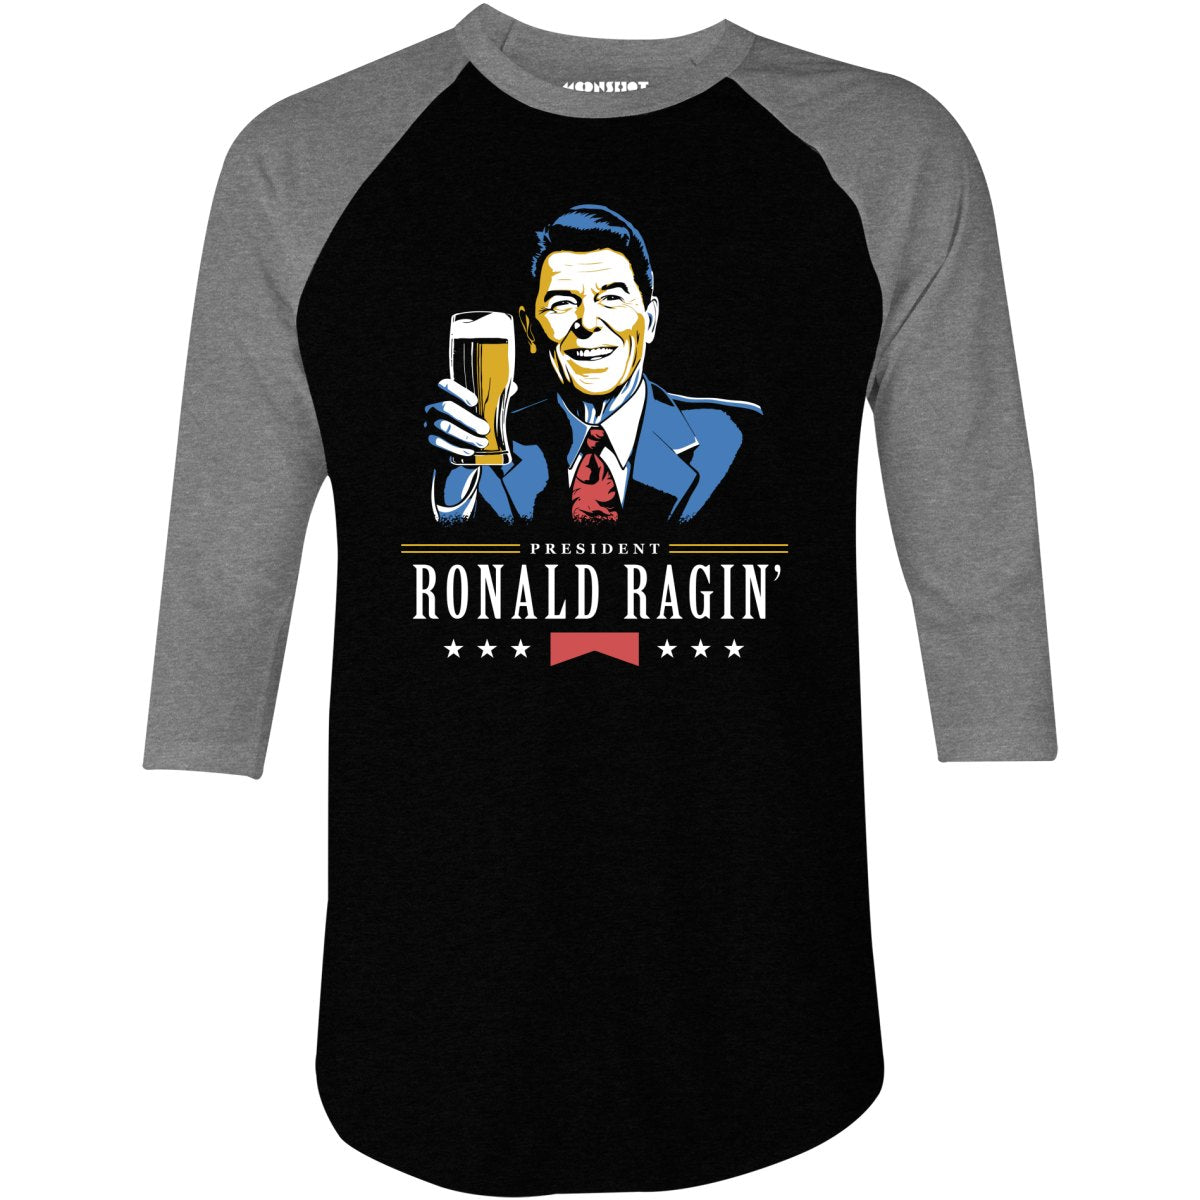 President Ronald Ragin' - 3/4 Sleeve Raglan T-Shirt